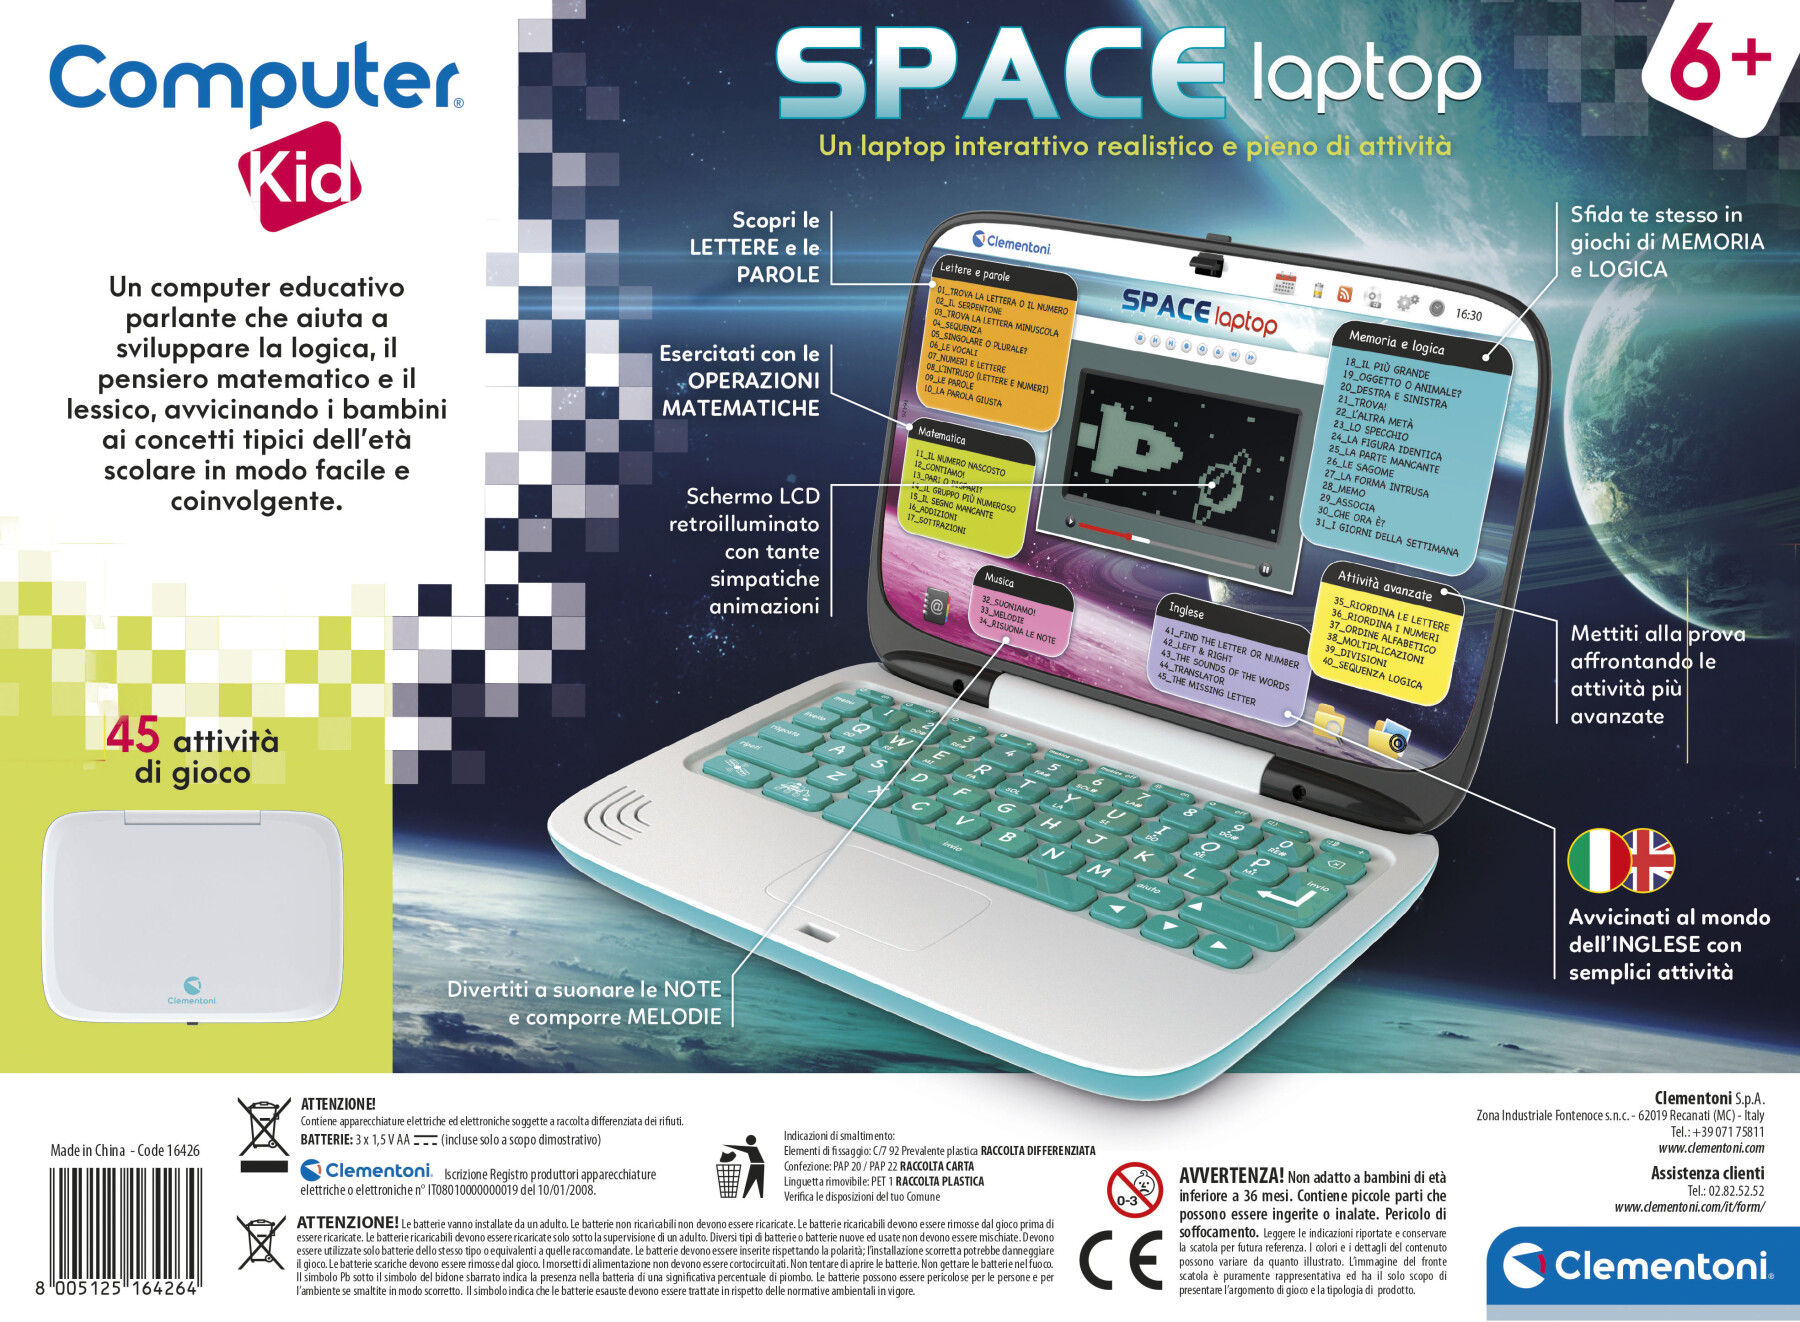 Space laptop - CLEMENTONI